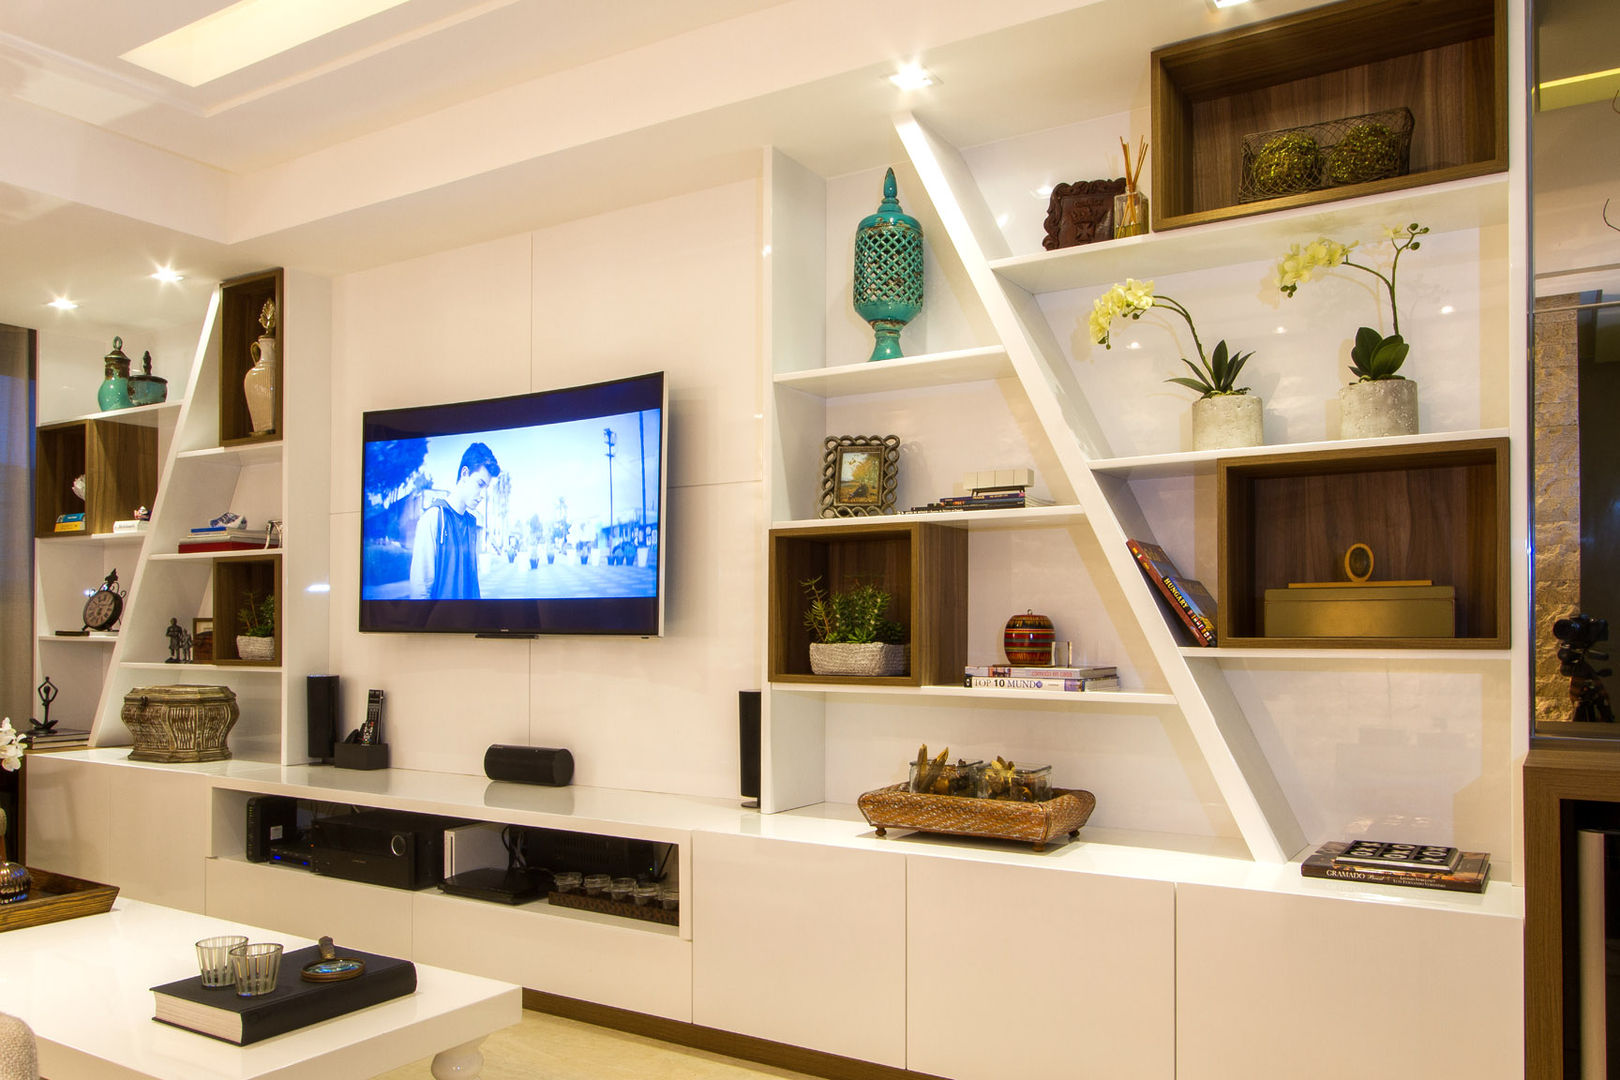 Apartamento com personalidade em Maceió Alagoas, Cris Nunes Arquiteta Cris Nunes Arquiteta Ruang Keluarga Klasik Accessories & decoration